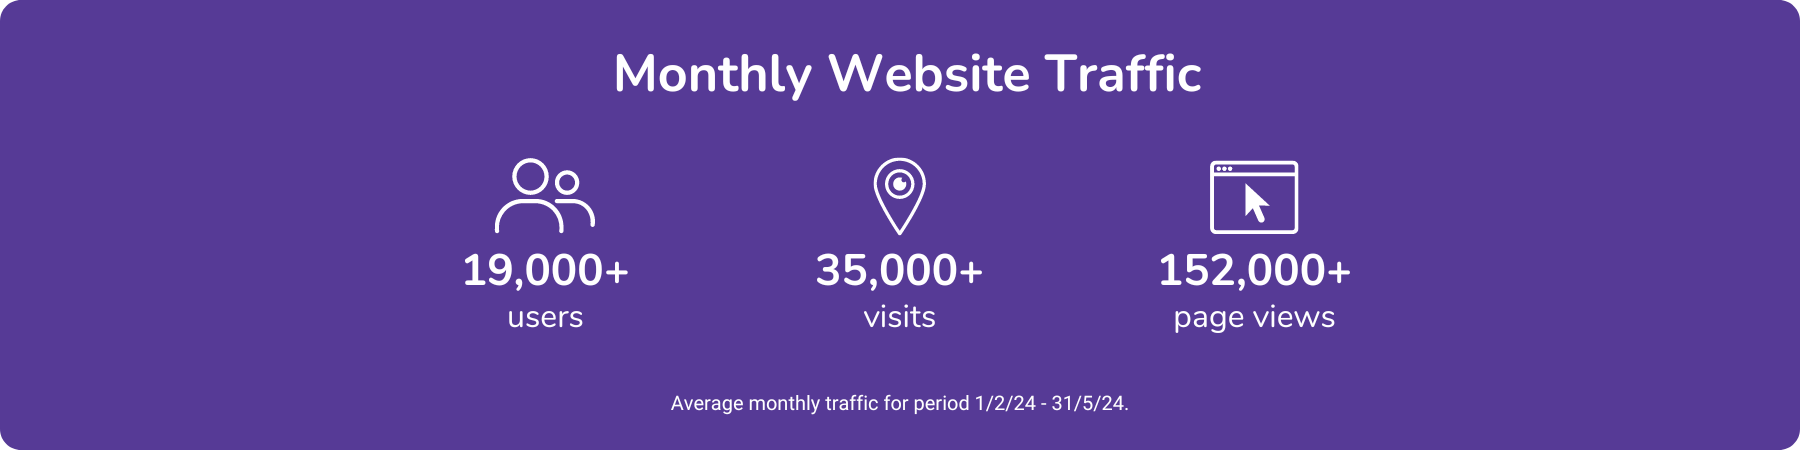 Monthly Website Traffic Statistics